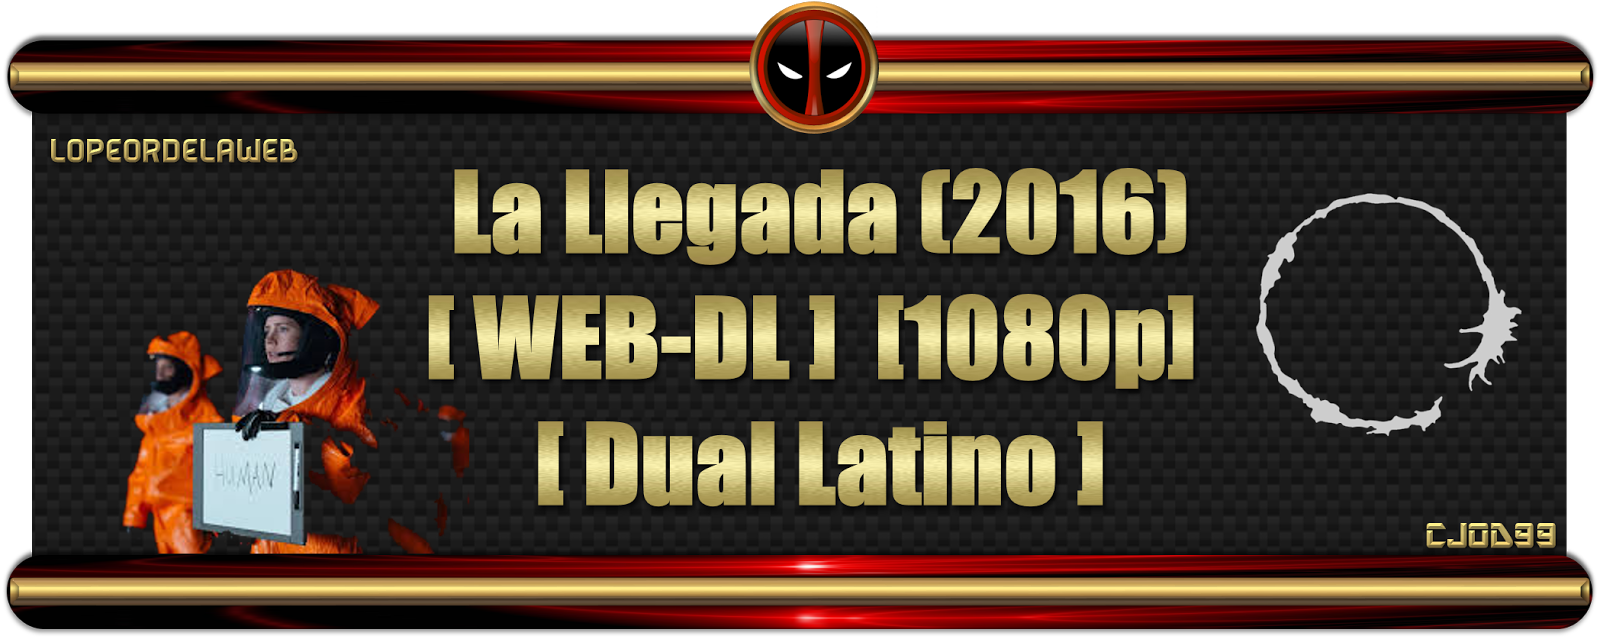 La Llegada (2016)[WEB-DL][1080P][Dual Latino]